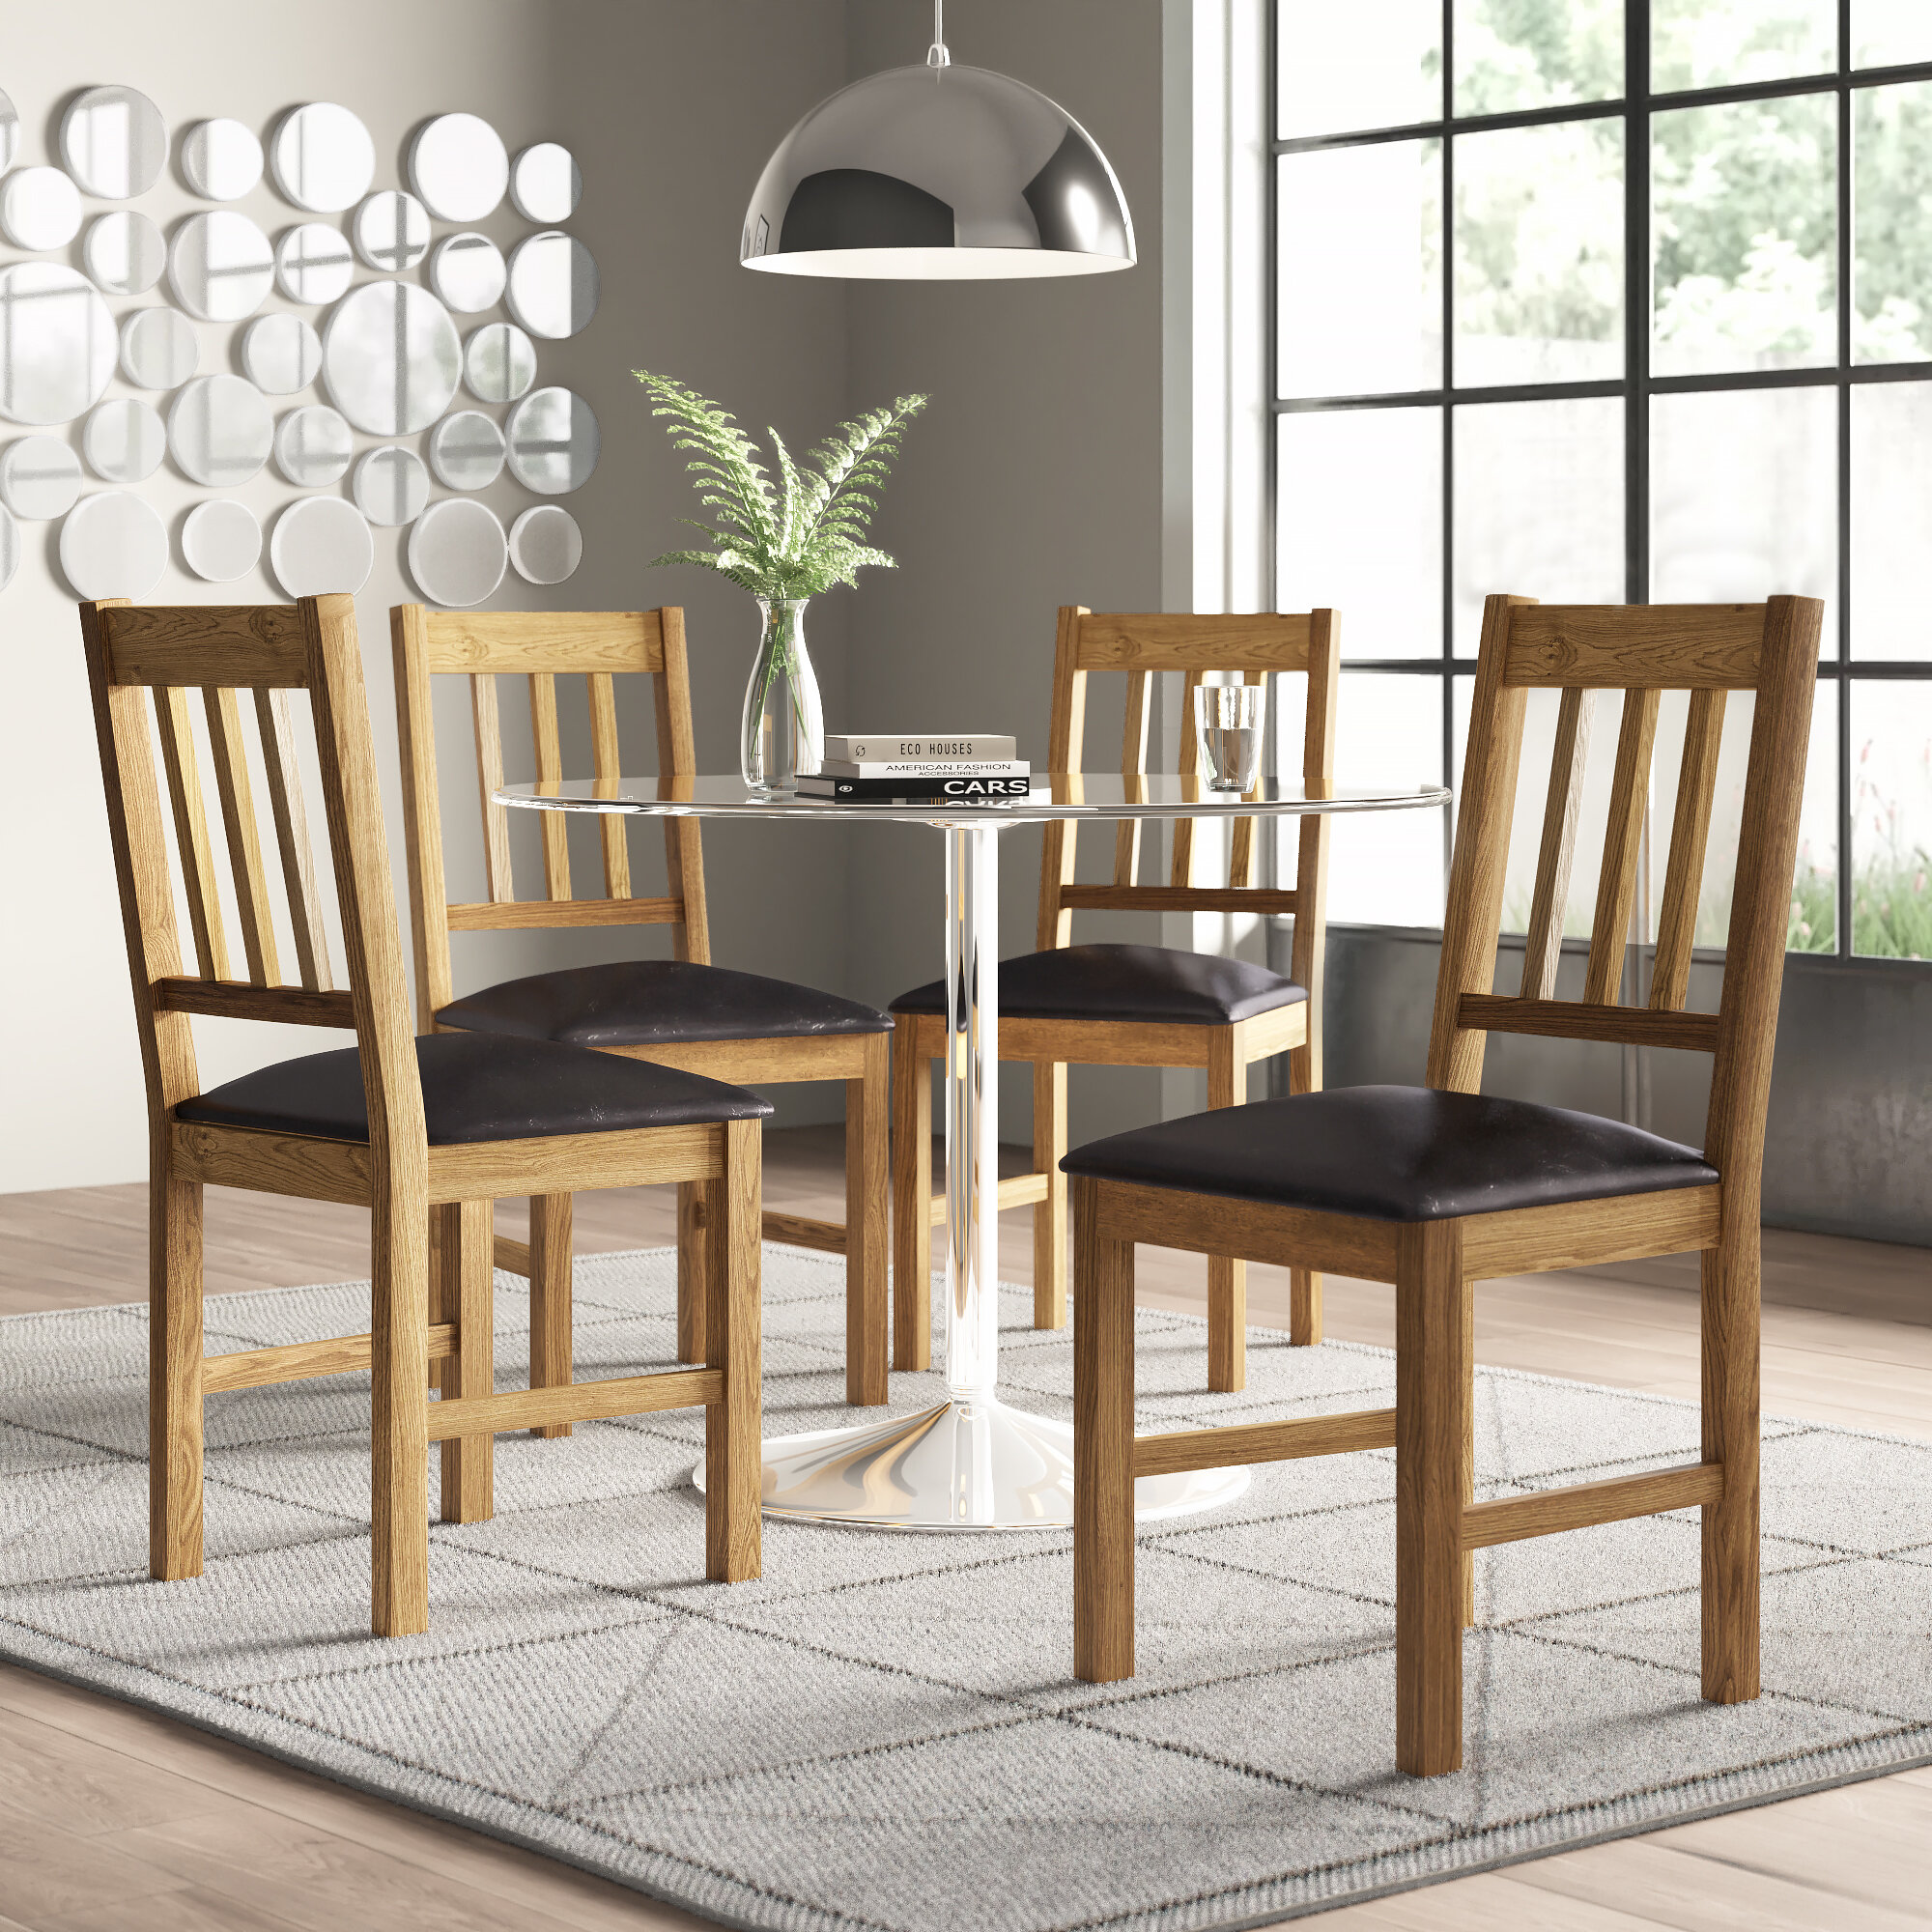 Wood Chair Set - Q1kn2jr3ws8w2m - Brown parson chairs kitchen set of 6